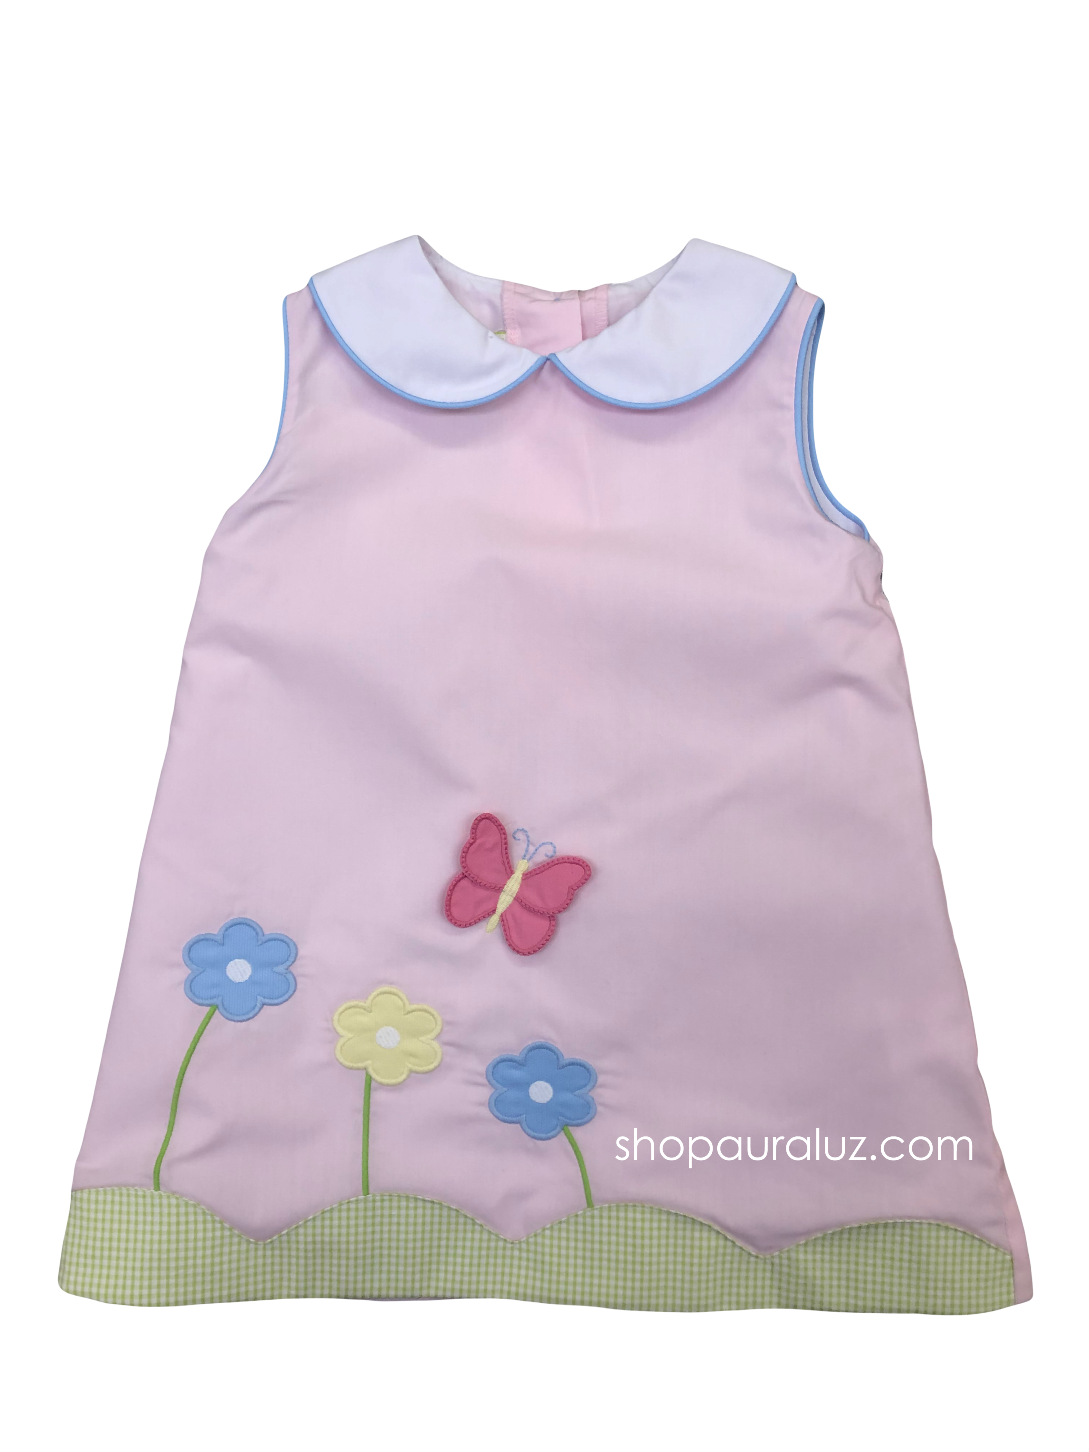 Pink Sleeveless Dress with butterfly garden applique